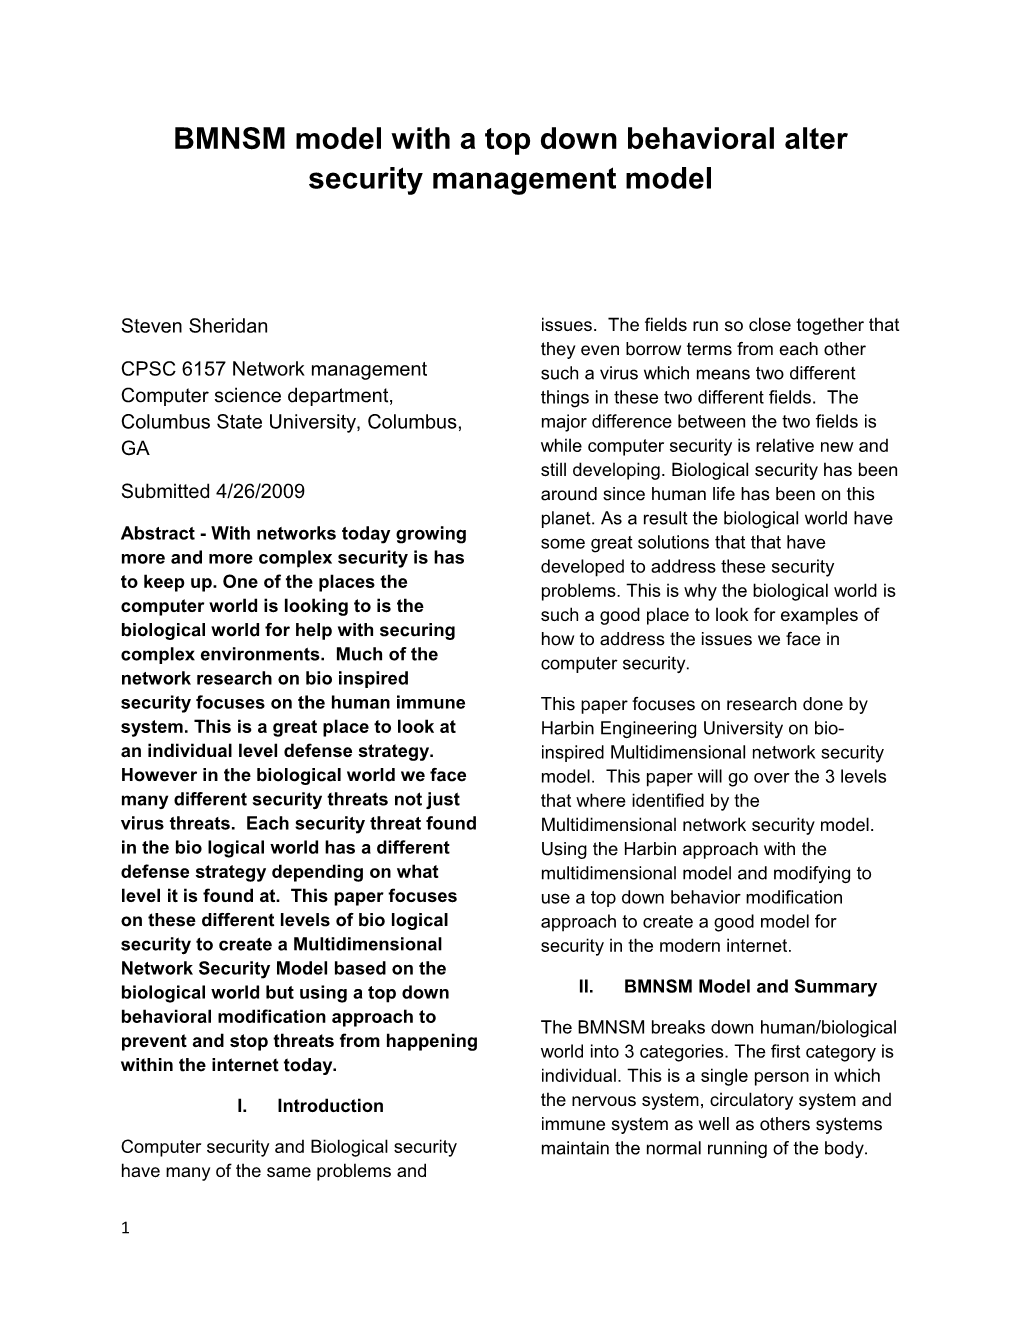 BMNSM Model with a Top Down Behavioral Alter Security Management Model